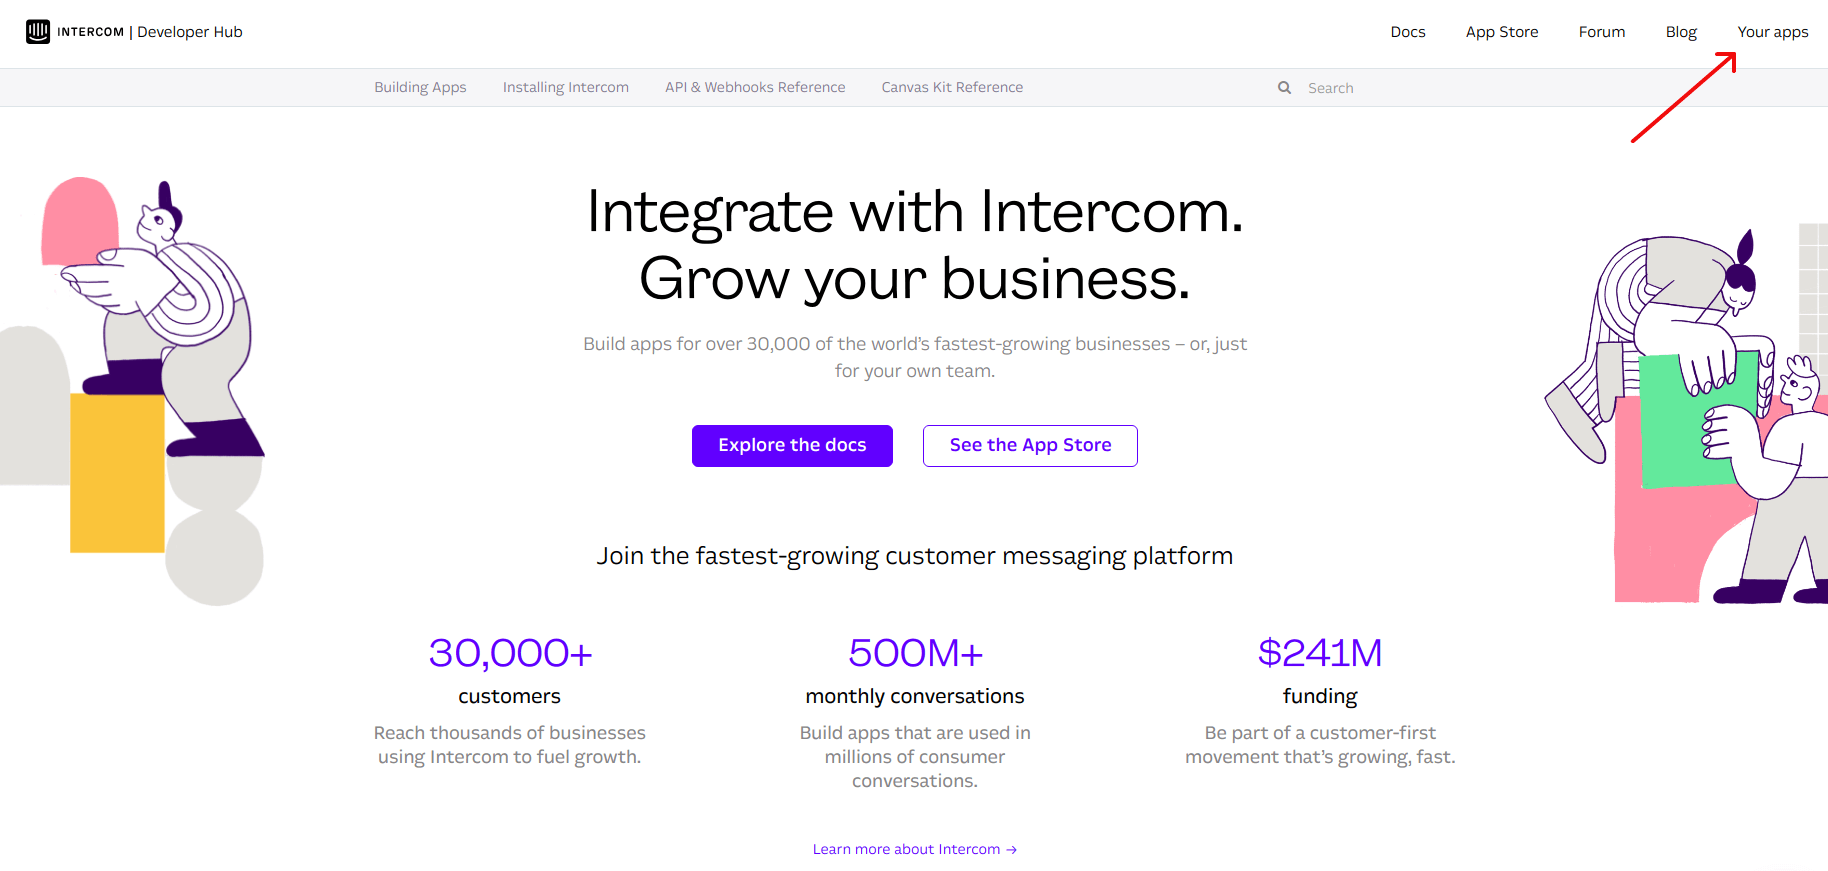 Intercom Developer Hub